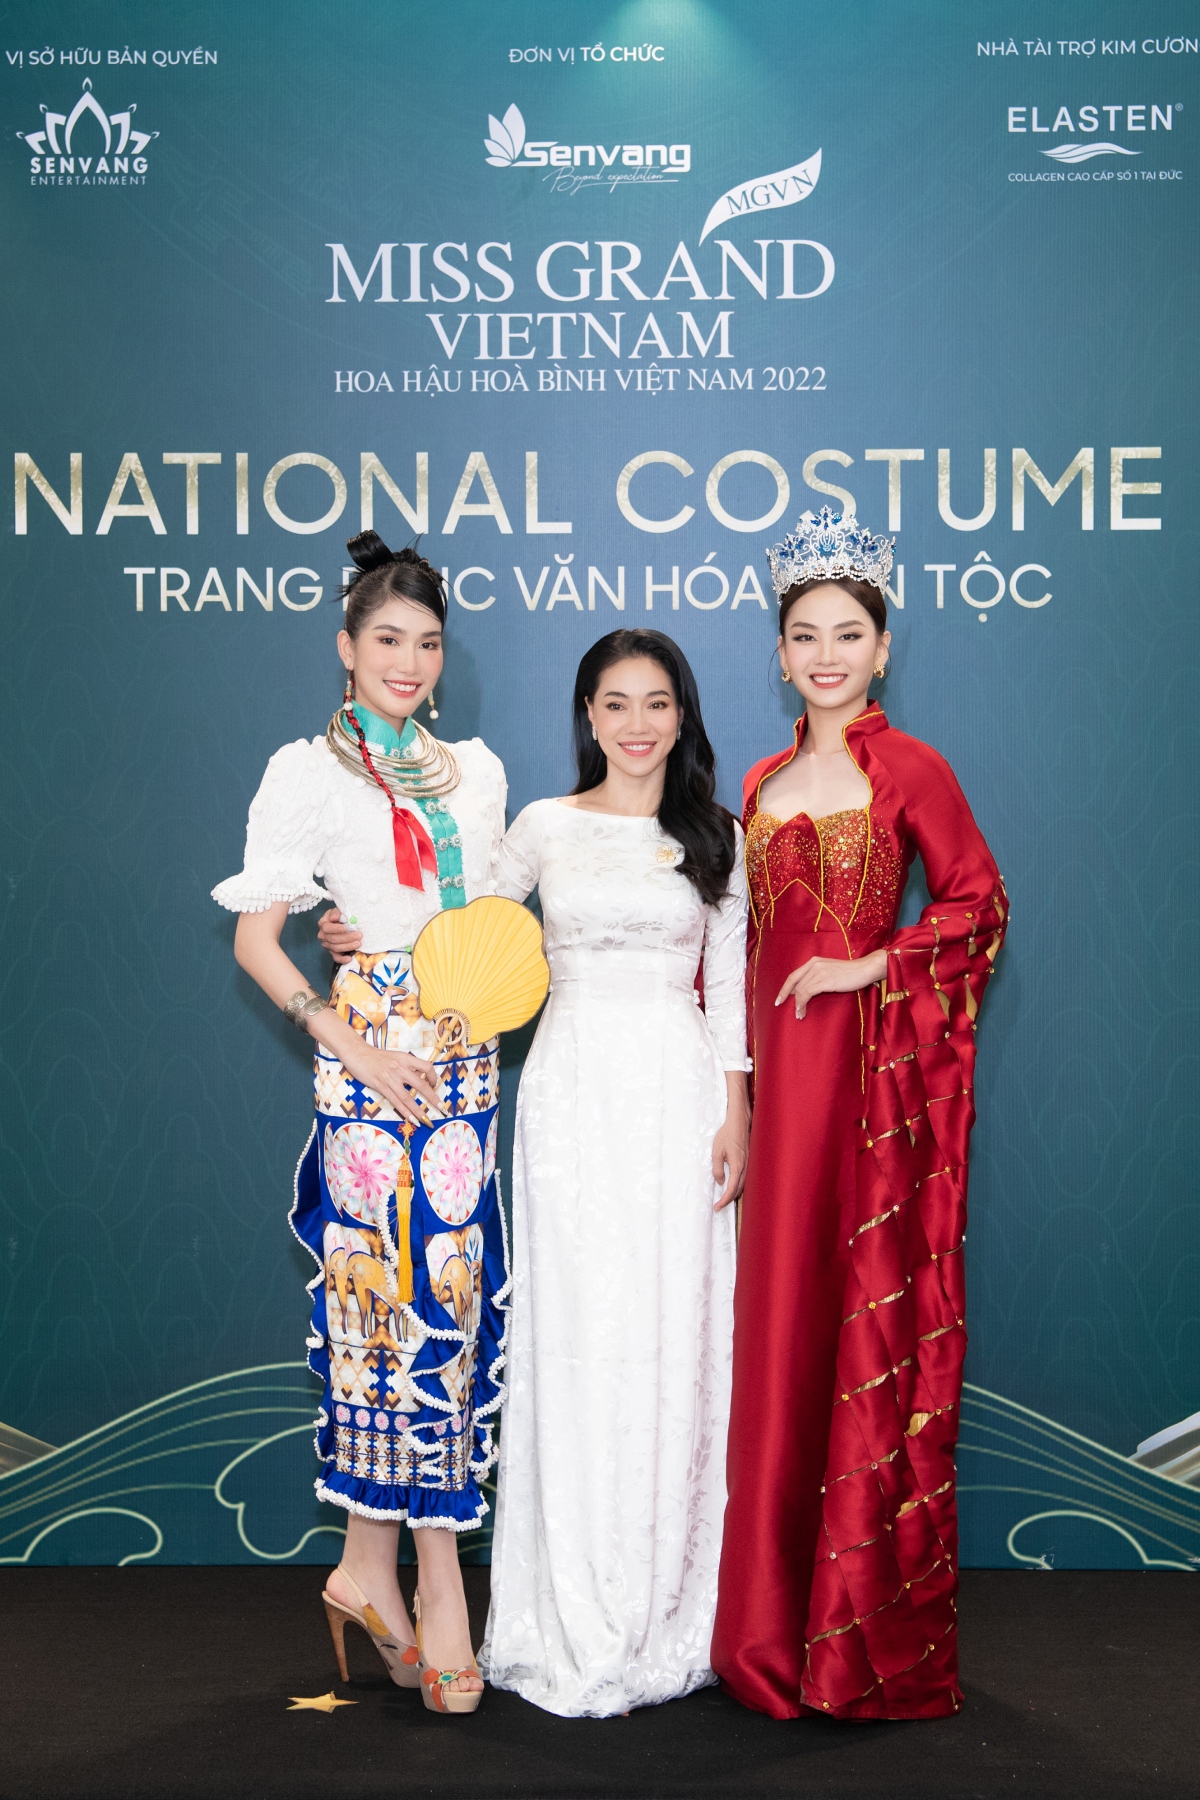 thuy tien cung dan hoa - A hau khoe dang tren tham do miss grand vietnam 2022 hinh anh 1